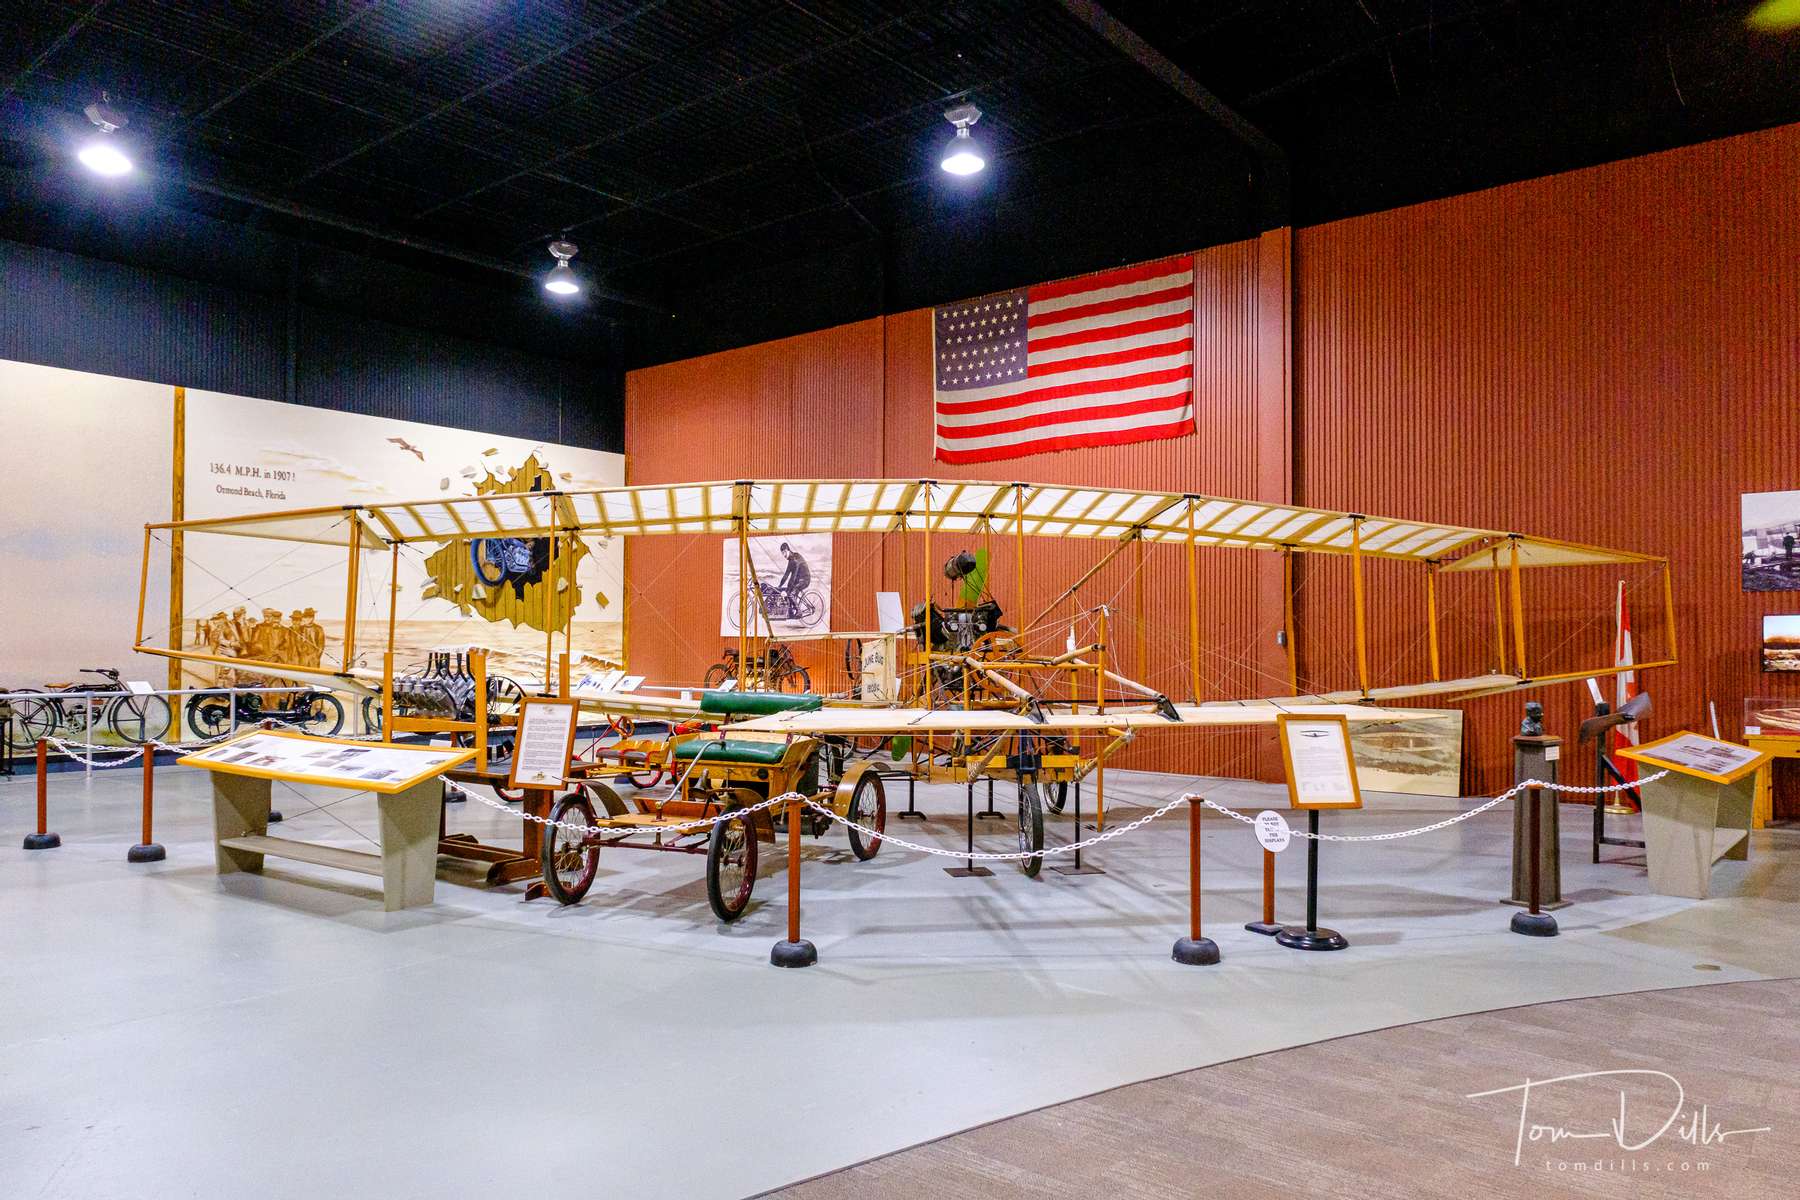 The Glenn H Curtiss Museum in Hammondsport, New York